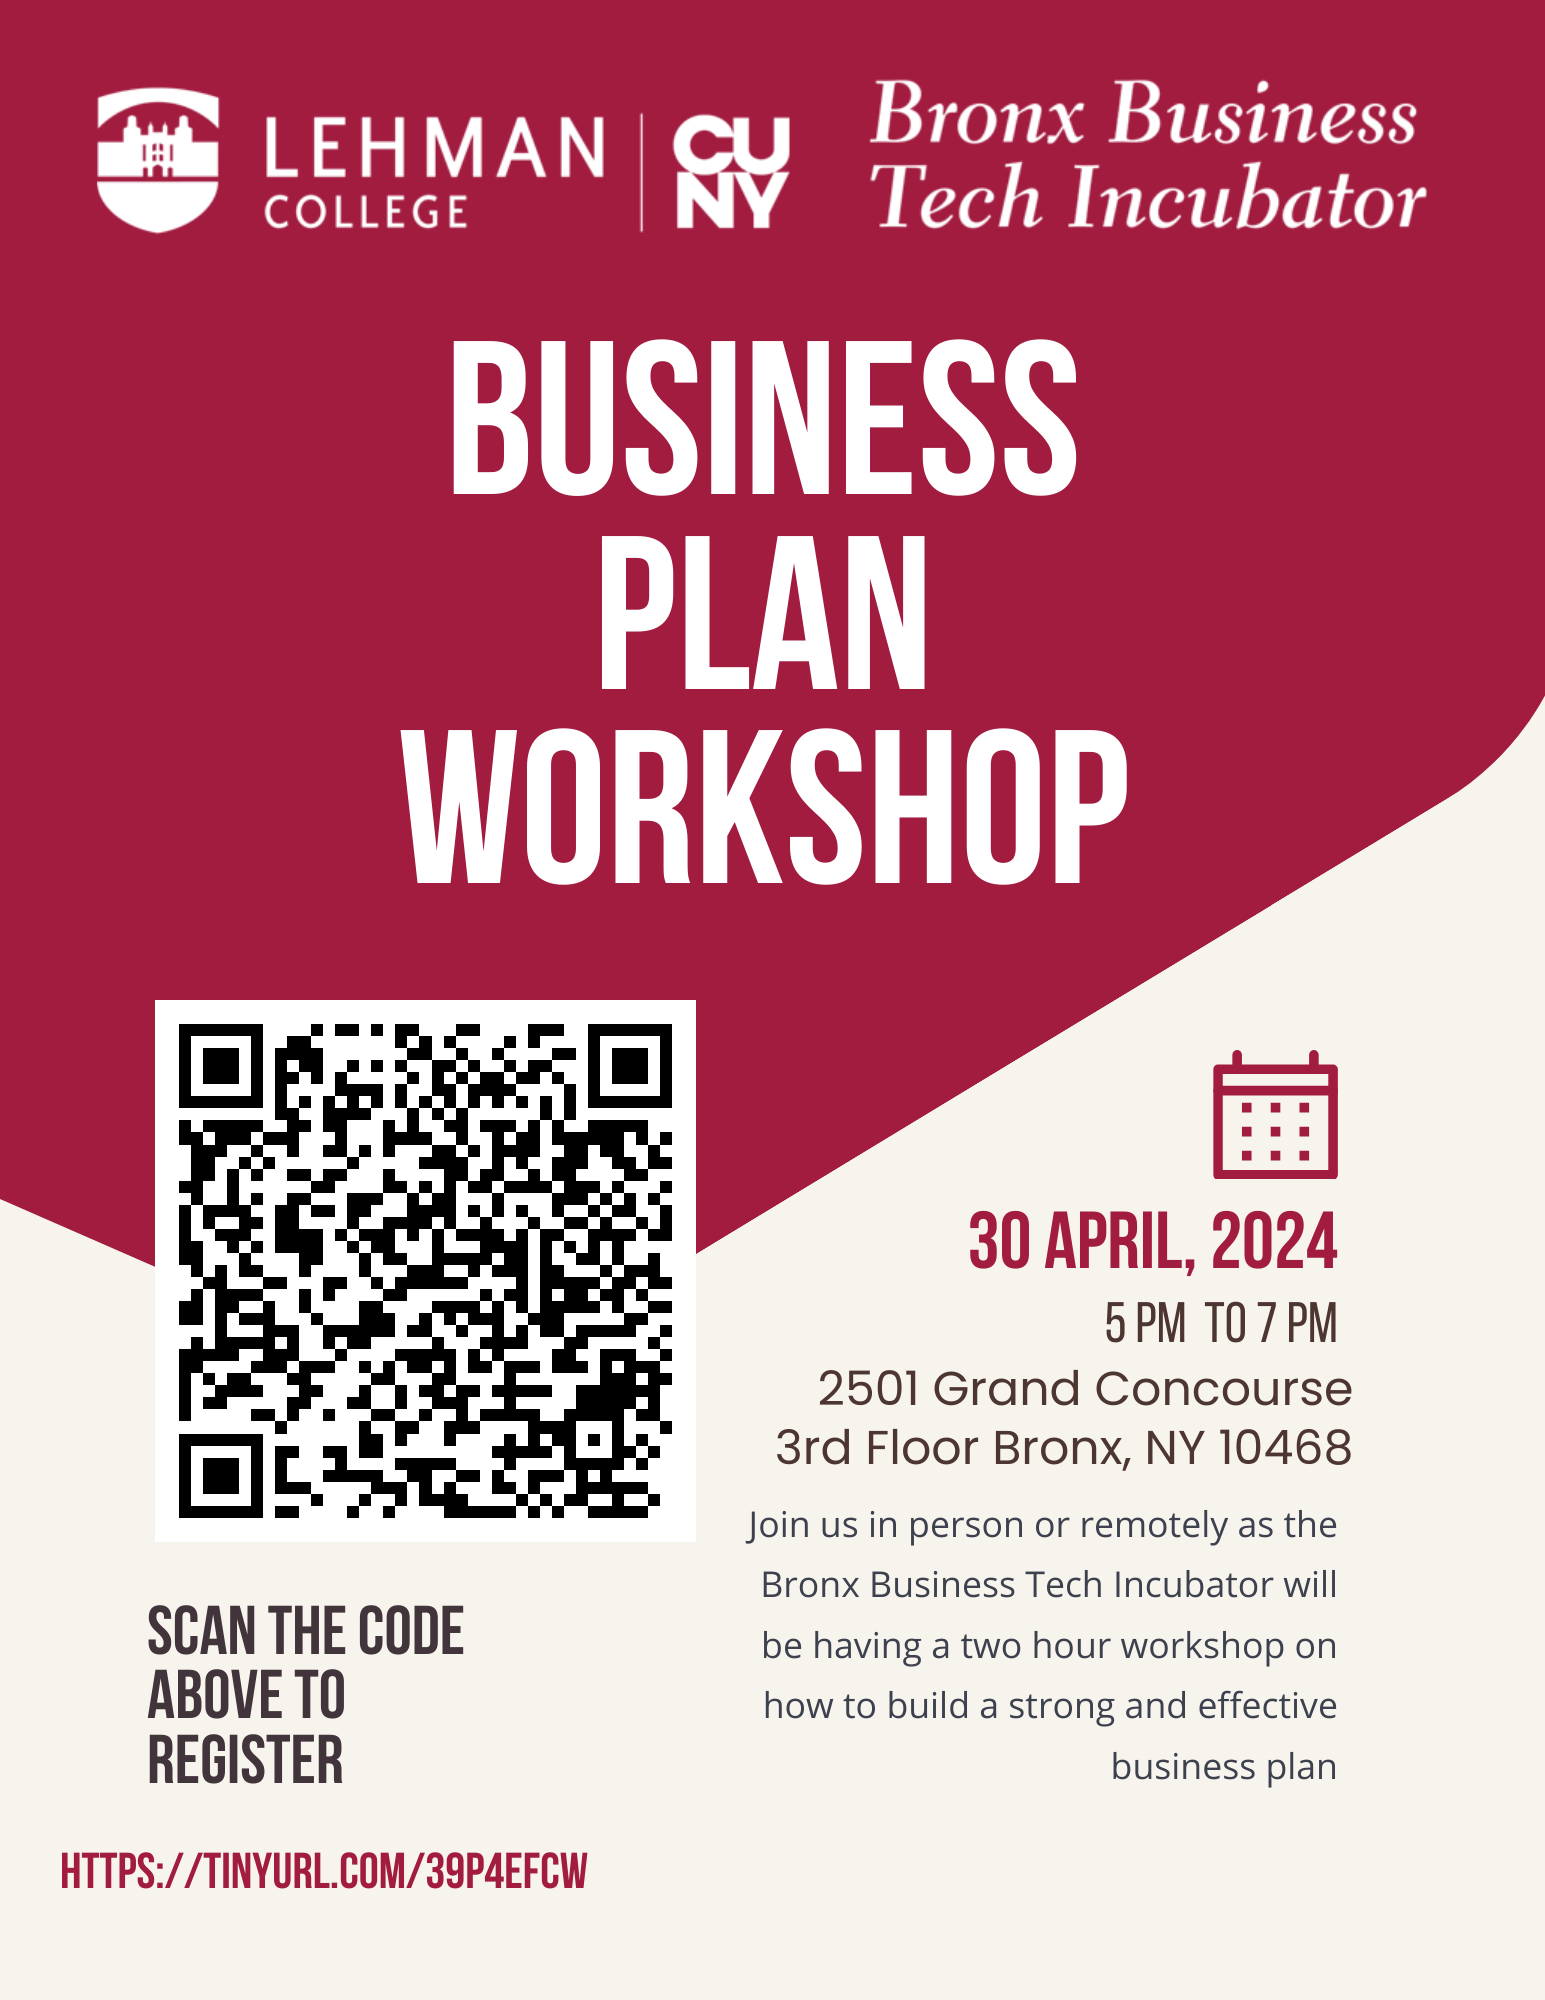 Bronx Business Tech Incubator Business Plan Workshop Flyer